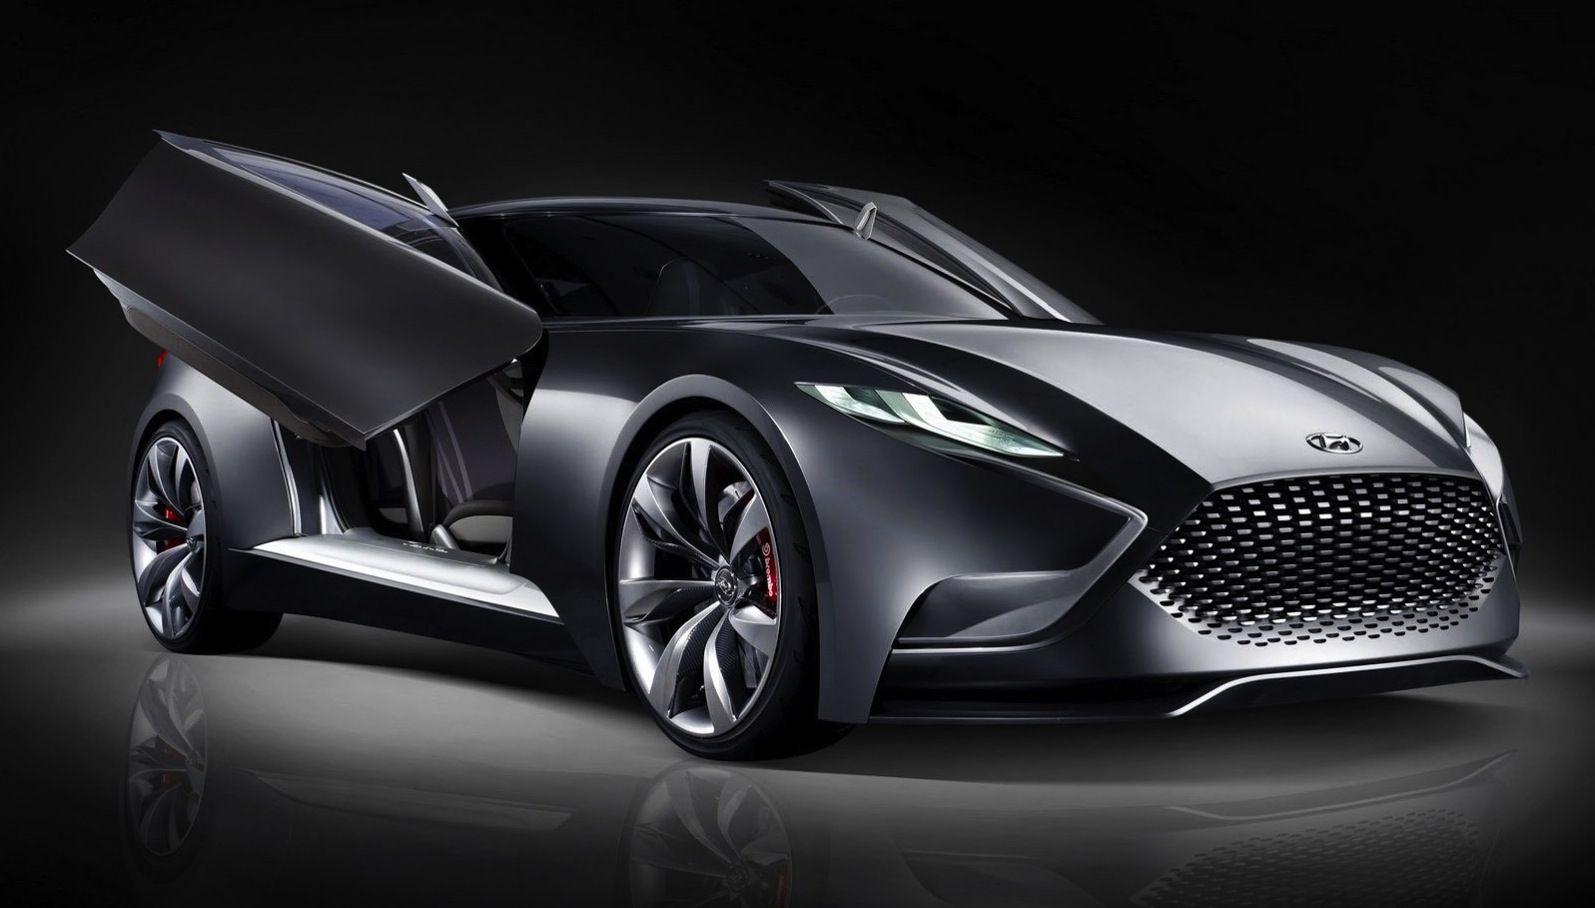 Hyundai Genesis Coupe, To bring motoring enthusiasts to